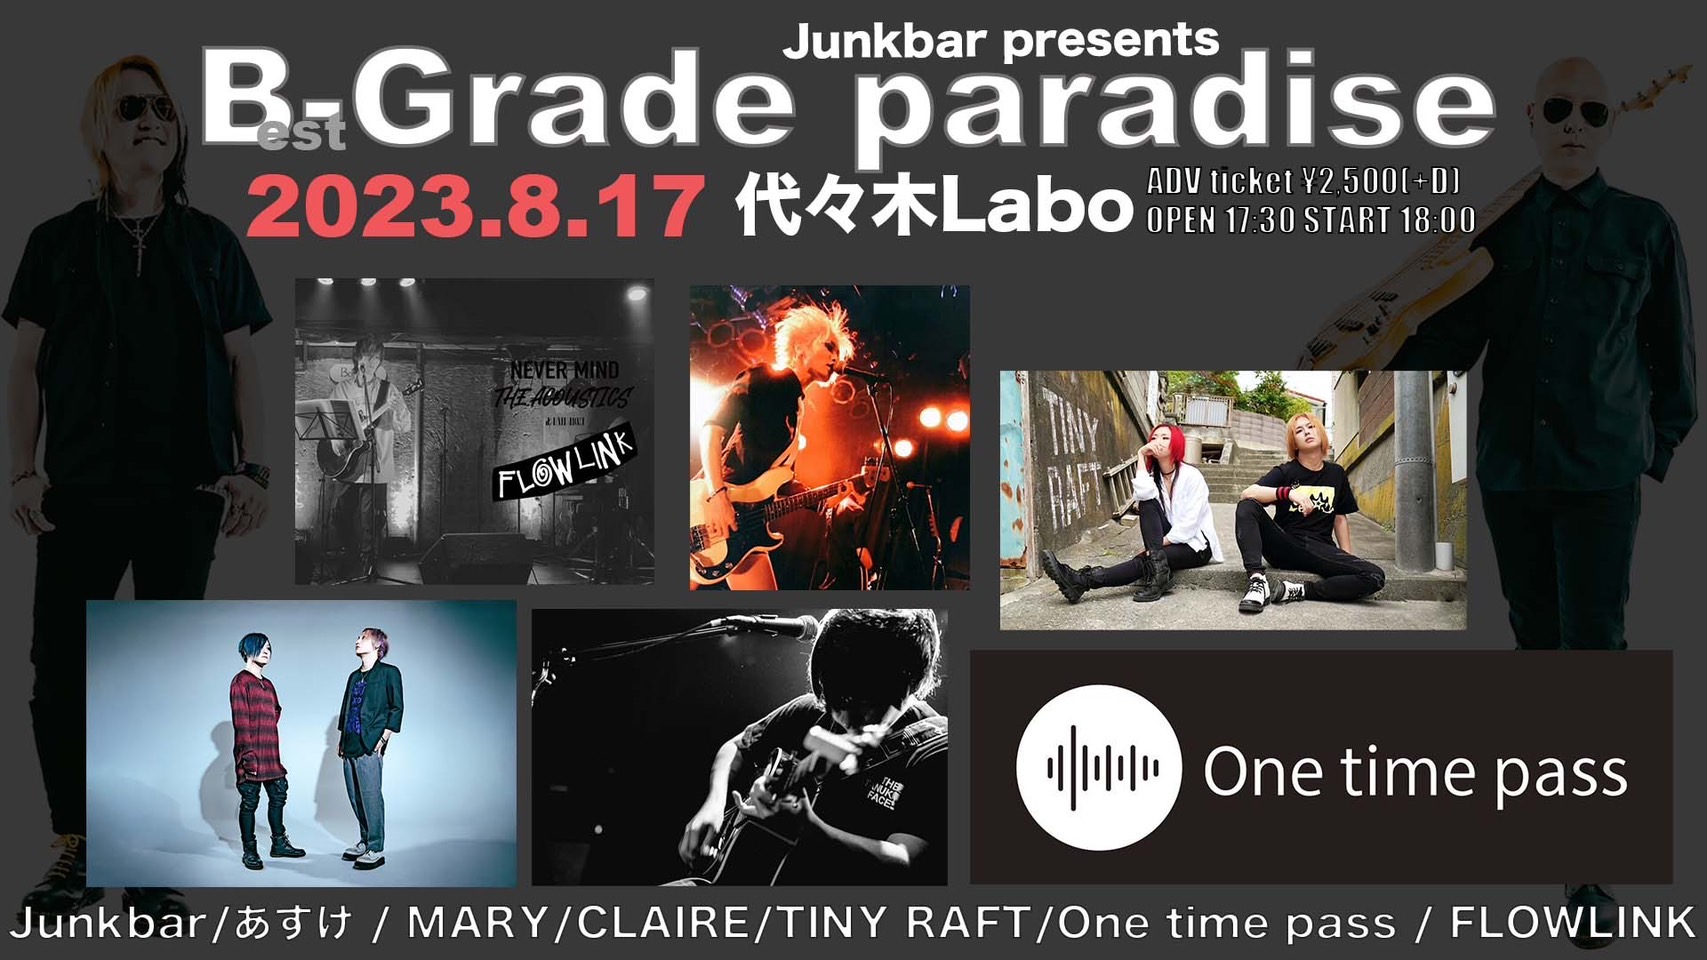 Junkbar presents
B-Grade paradise